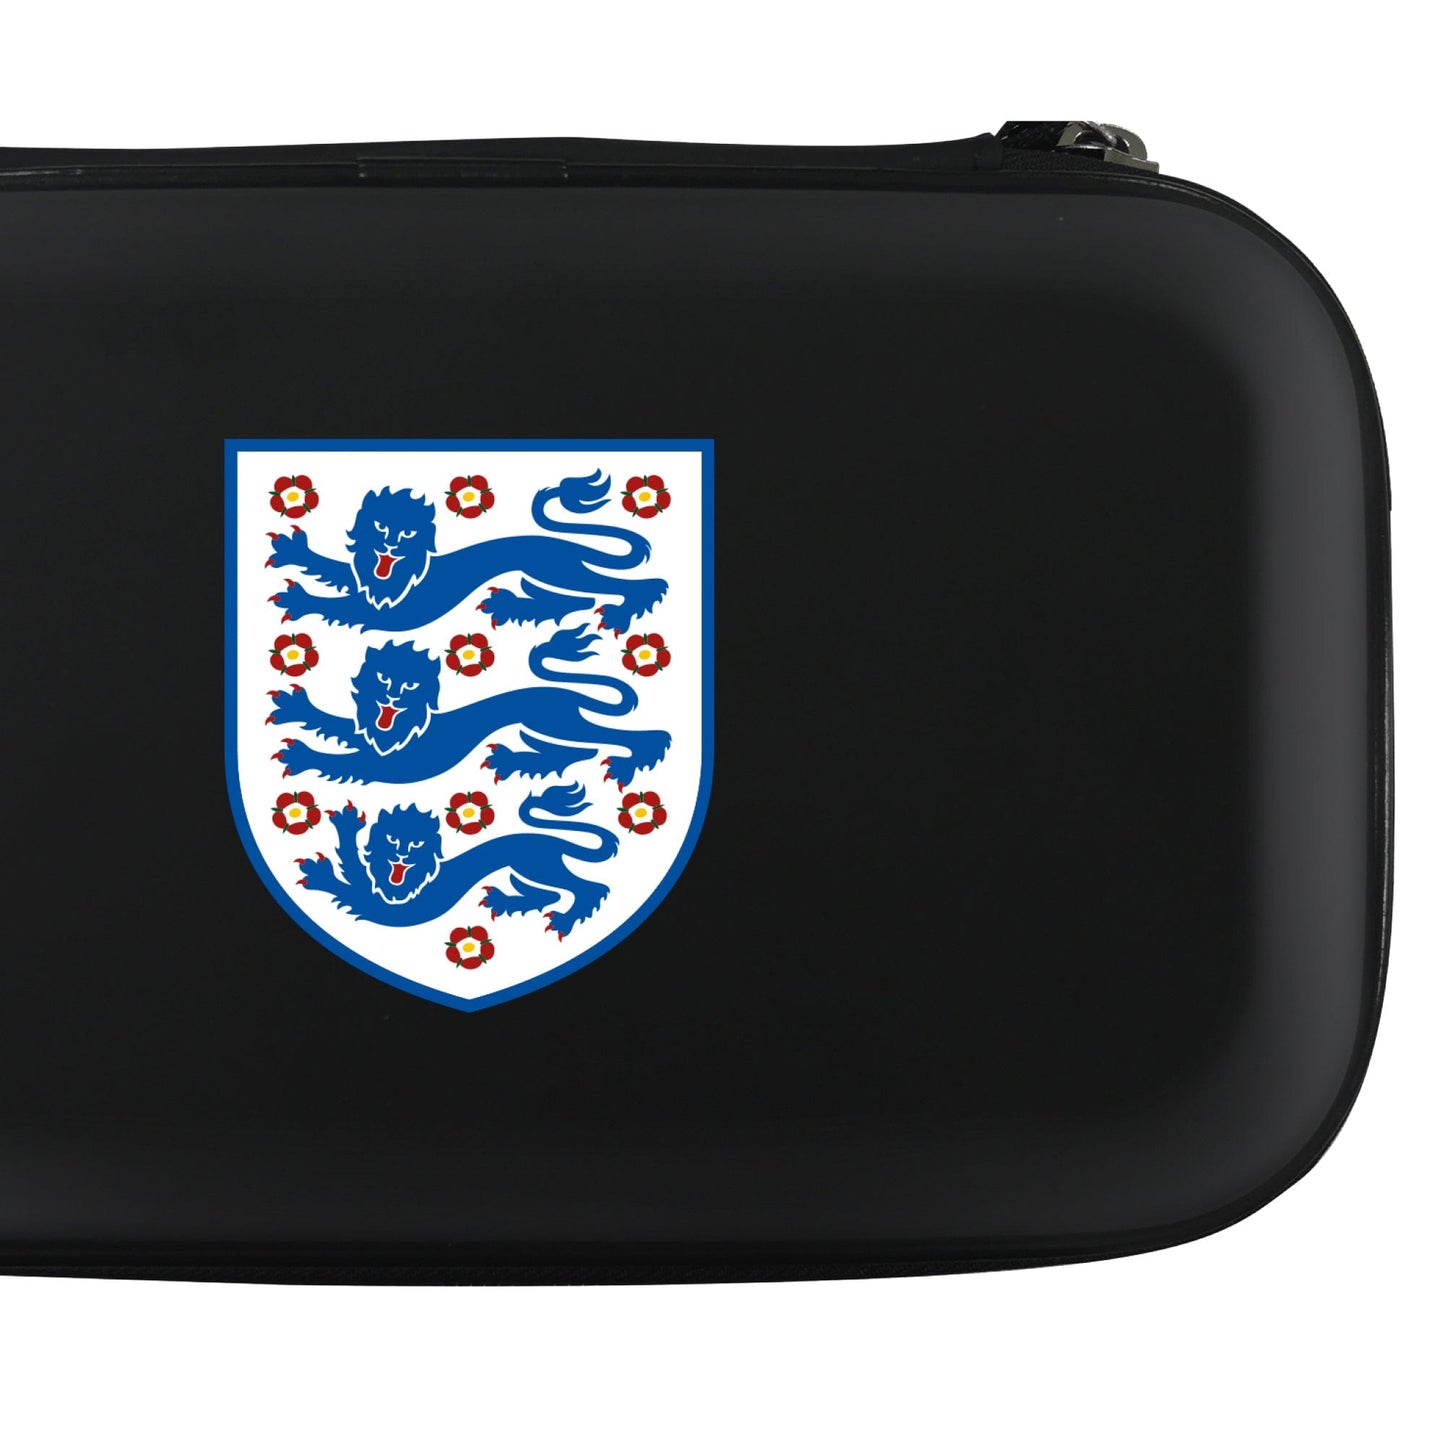 England Football Darts Case - Official Licensed - Black - W2 - 3 Lions Crest